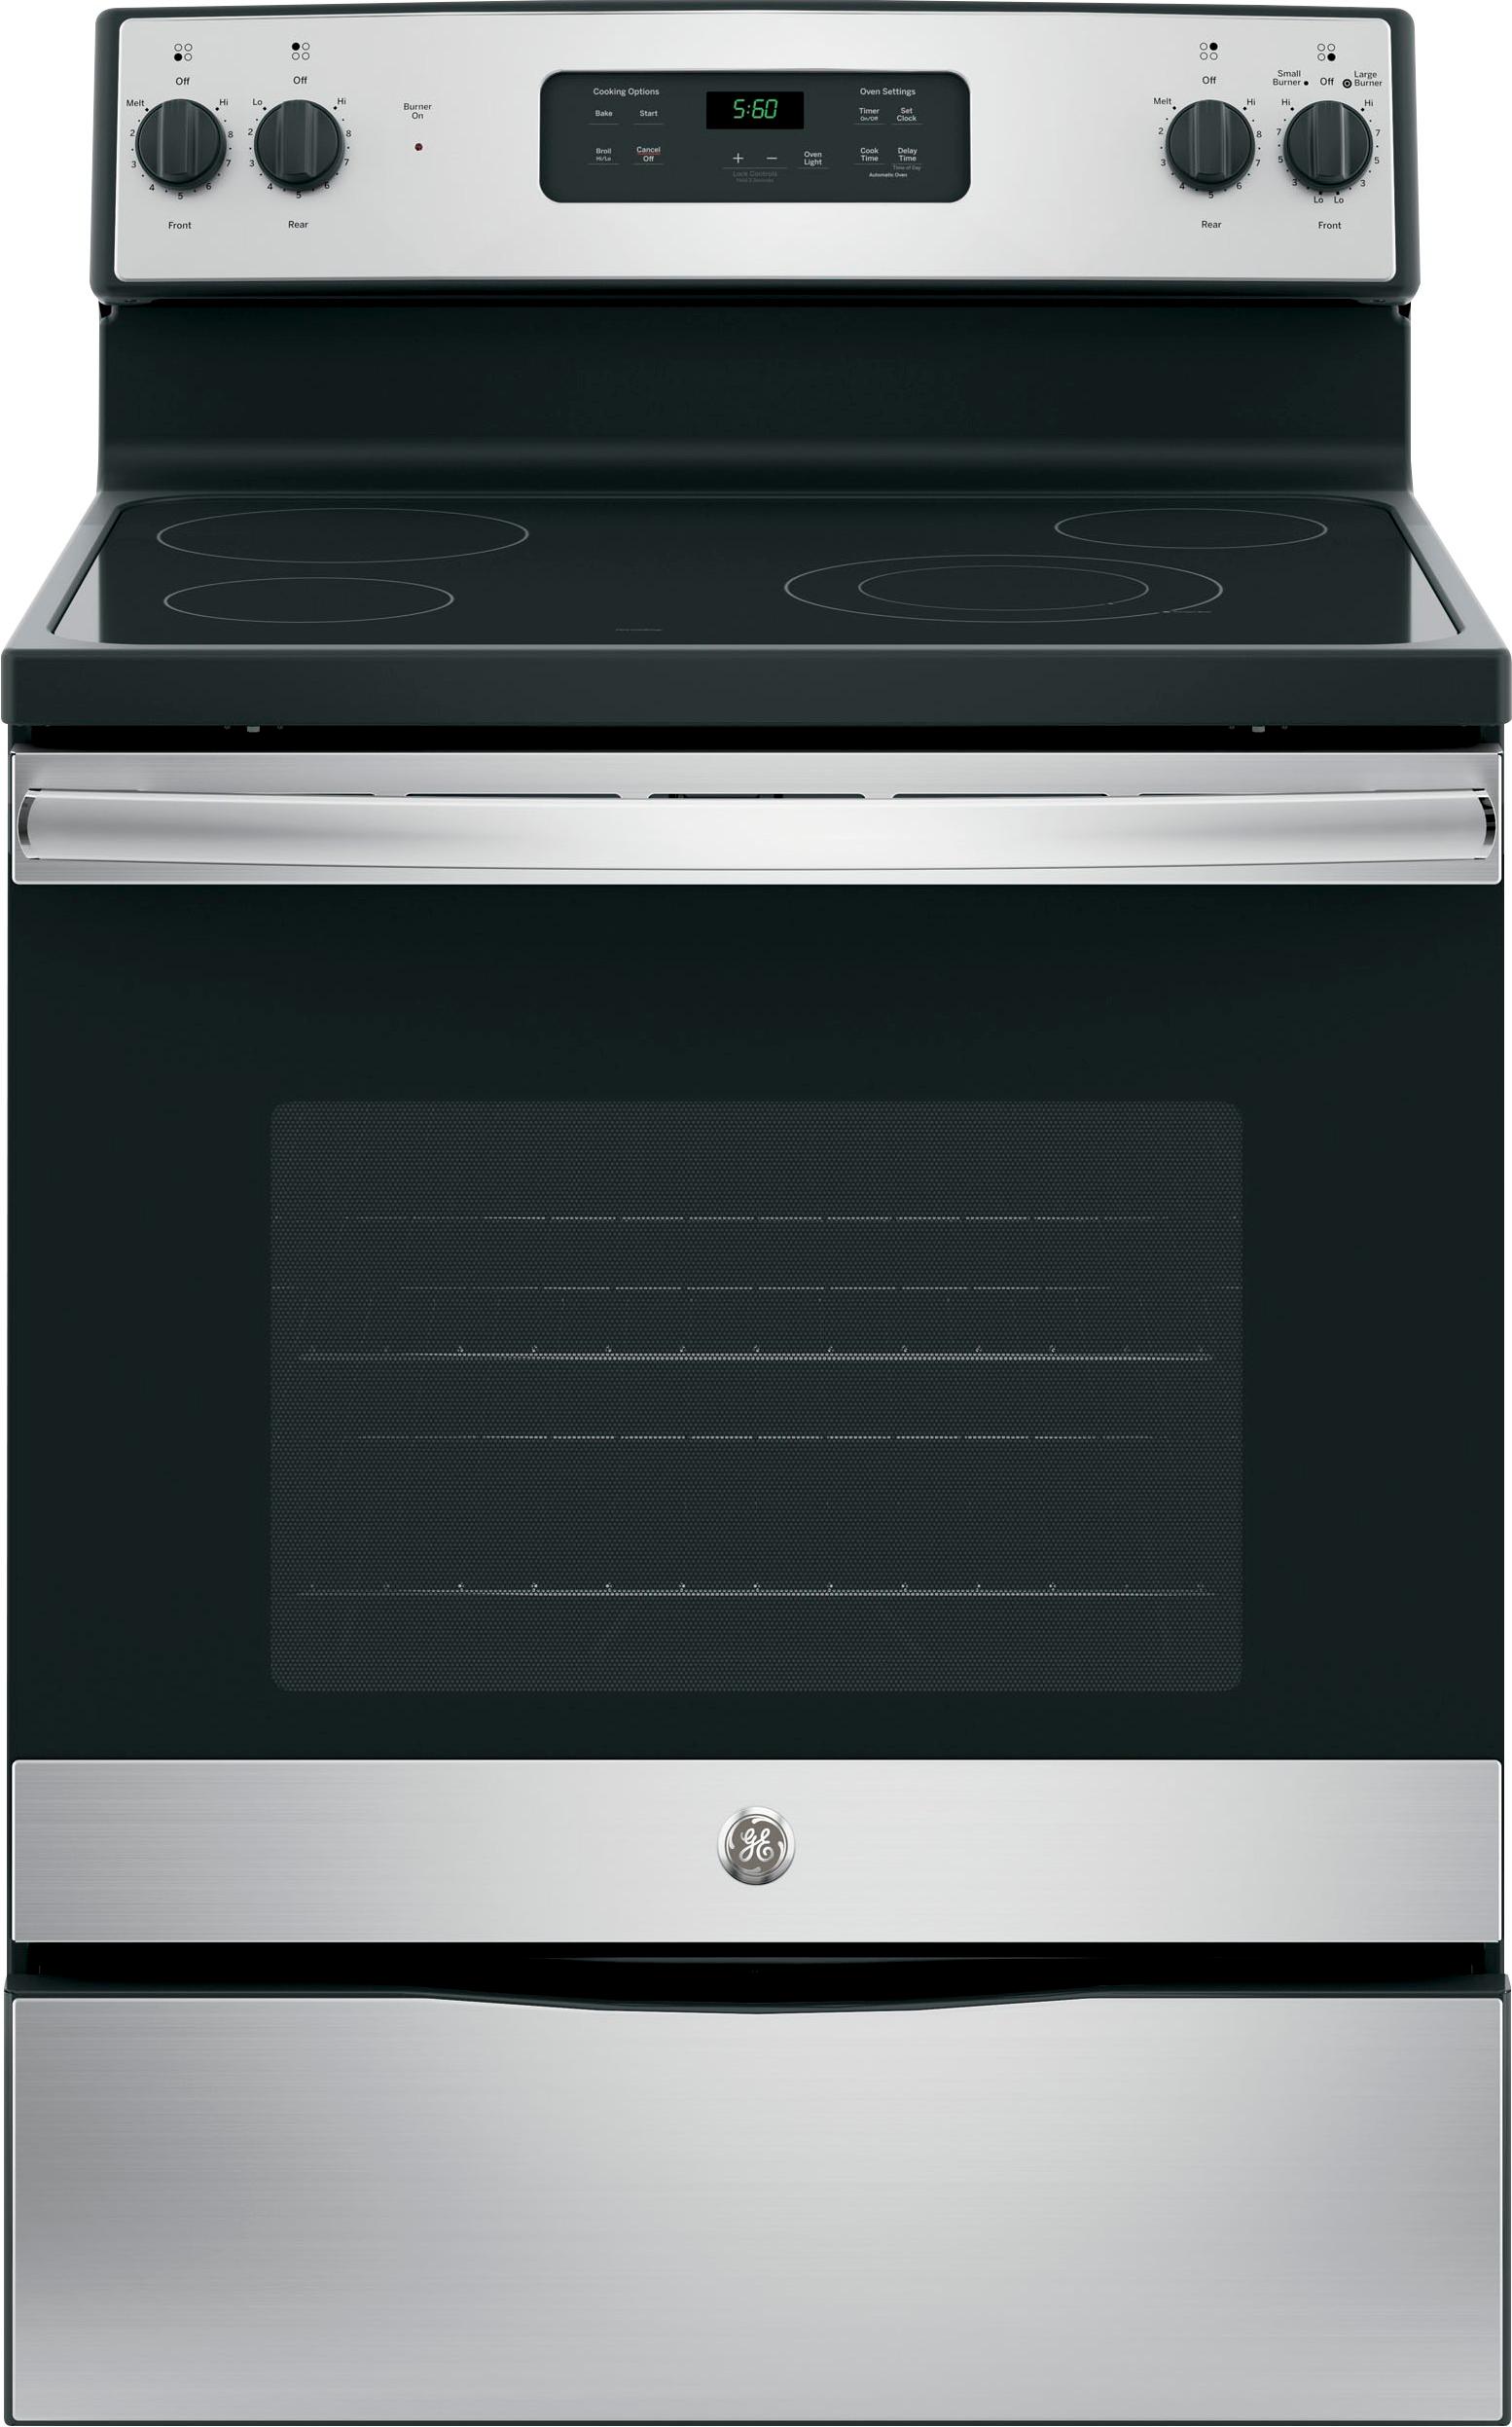 GE Slow Cooker - appliances - by owner - sale - craigslist